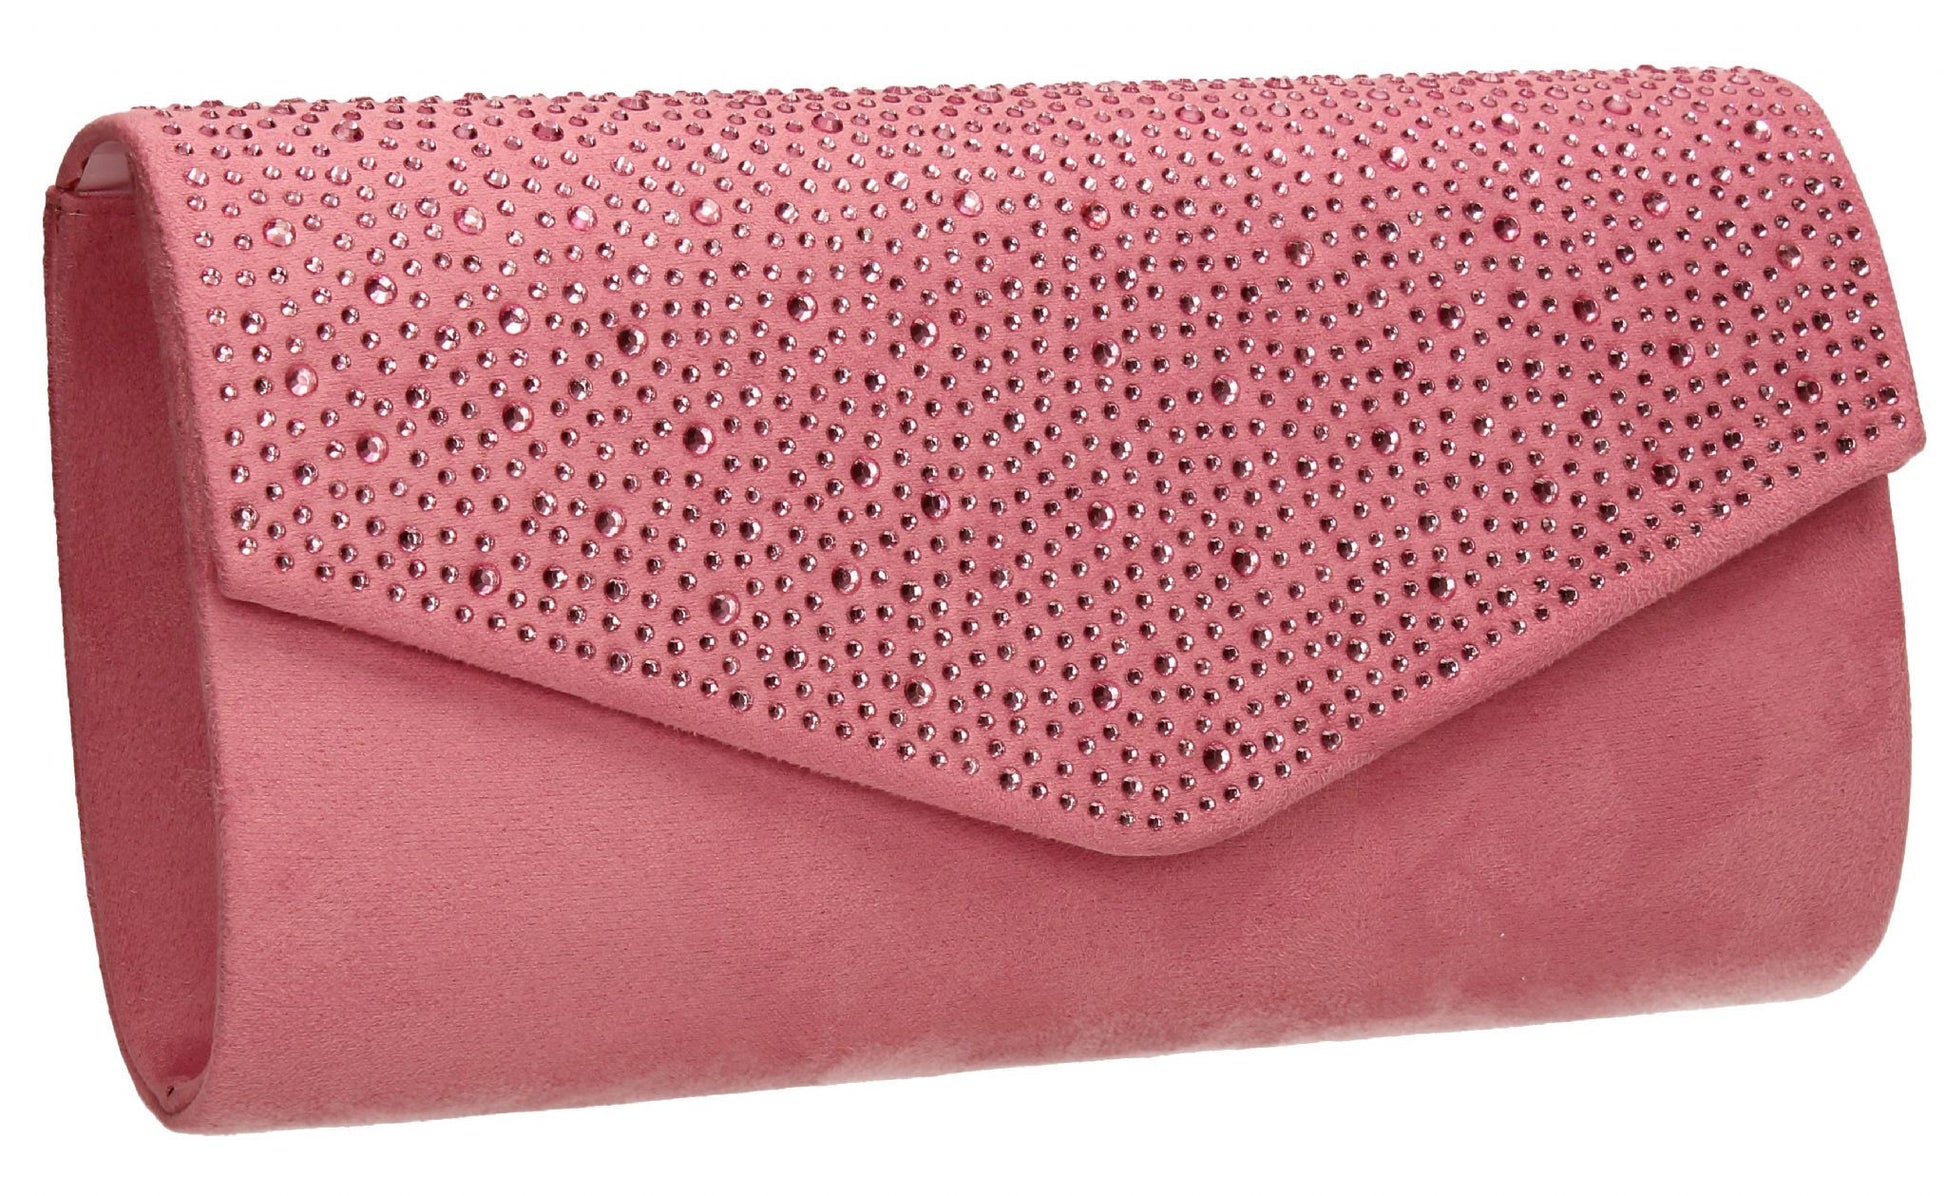 SWANKYSWANS Sandra Clutch Bag Pink Cute Cheap Clutch Bag For Weddings School and Work